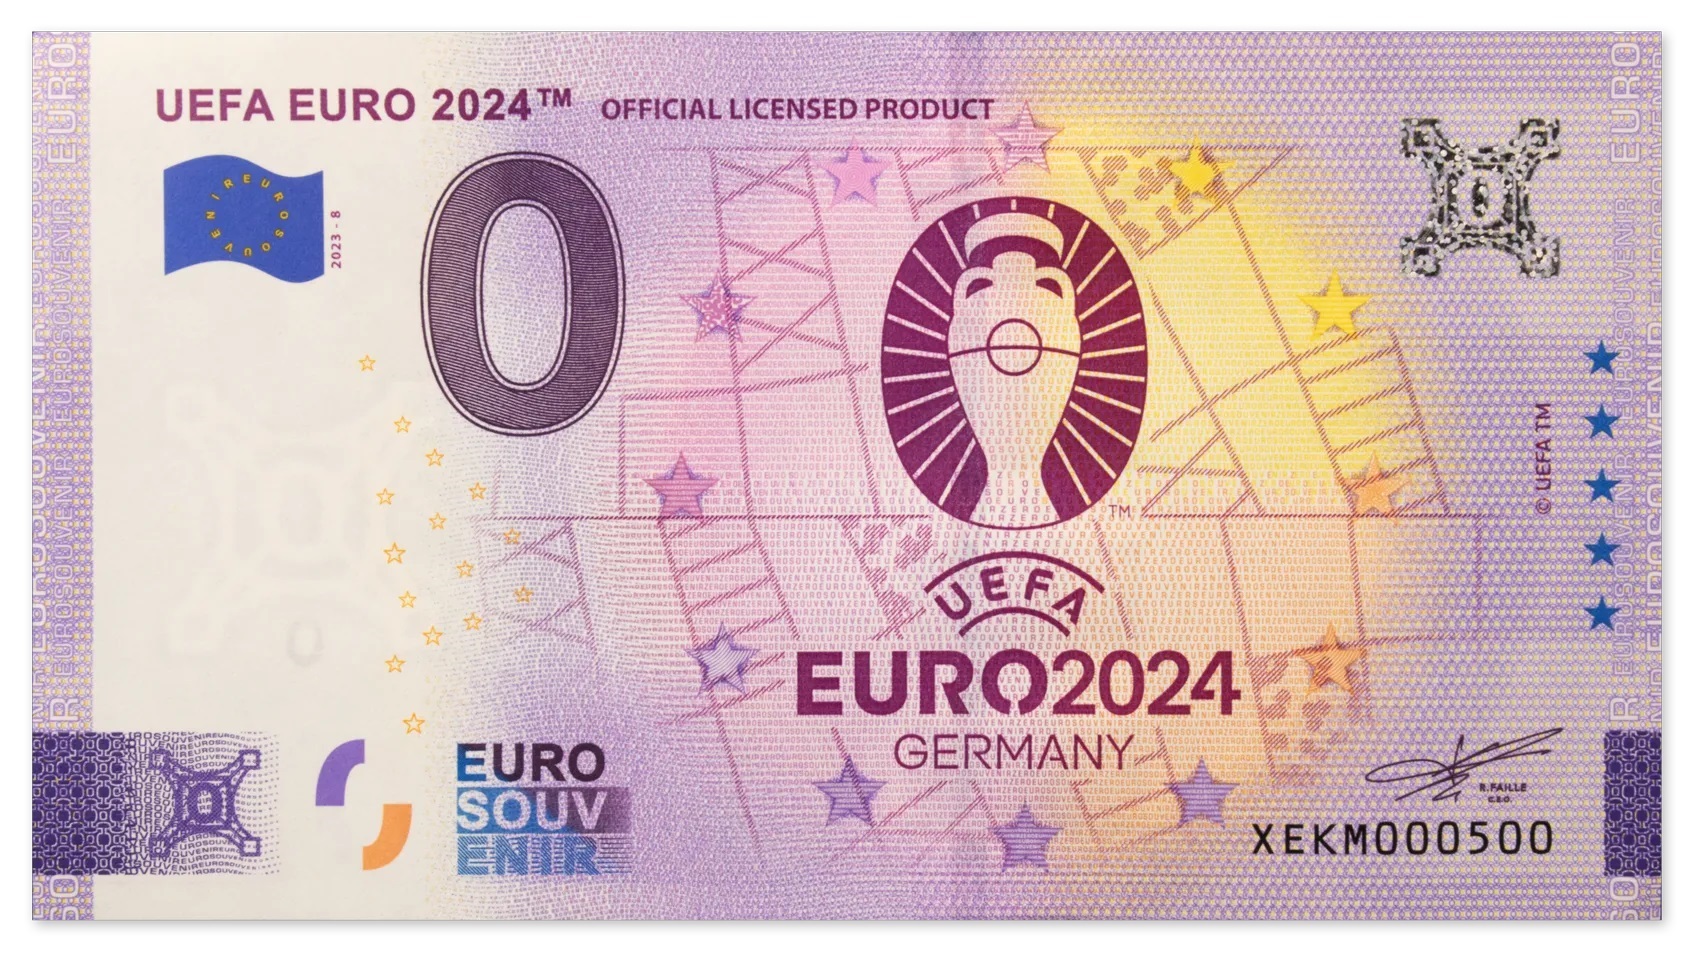 (EURBILLS.0.euro.2024.1.RF.E.XEKM.1) 0 euro banknote Germany 2024 - UEFA Euro, Germany 2024 (logo) Front (zoom)